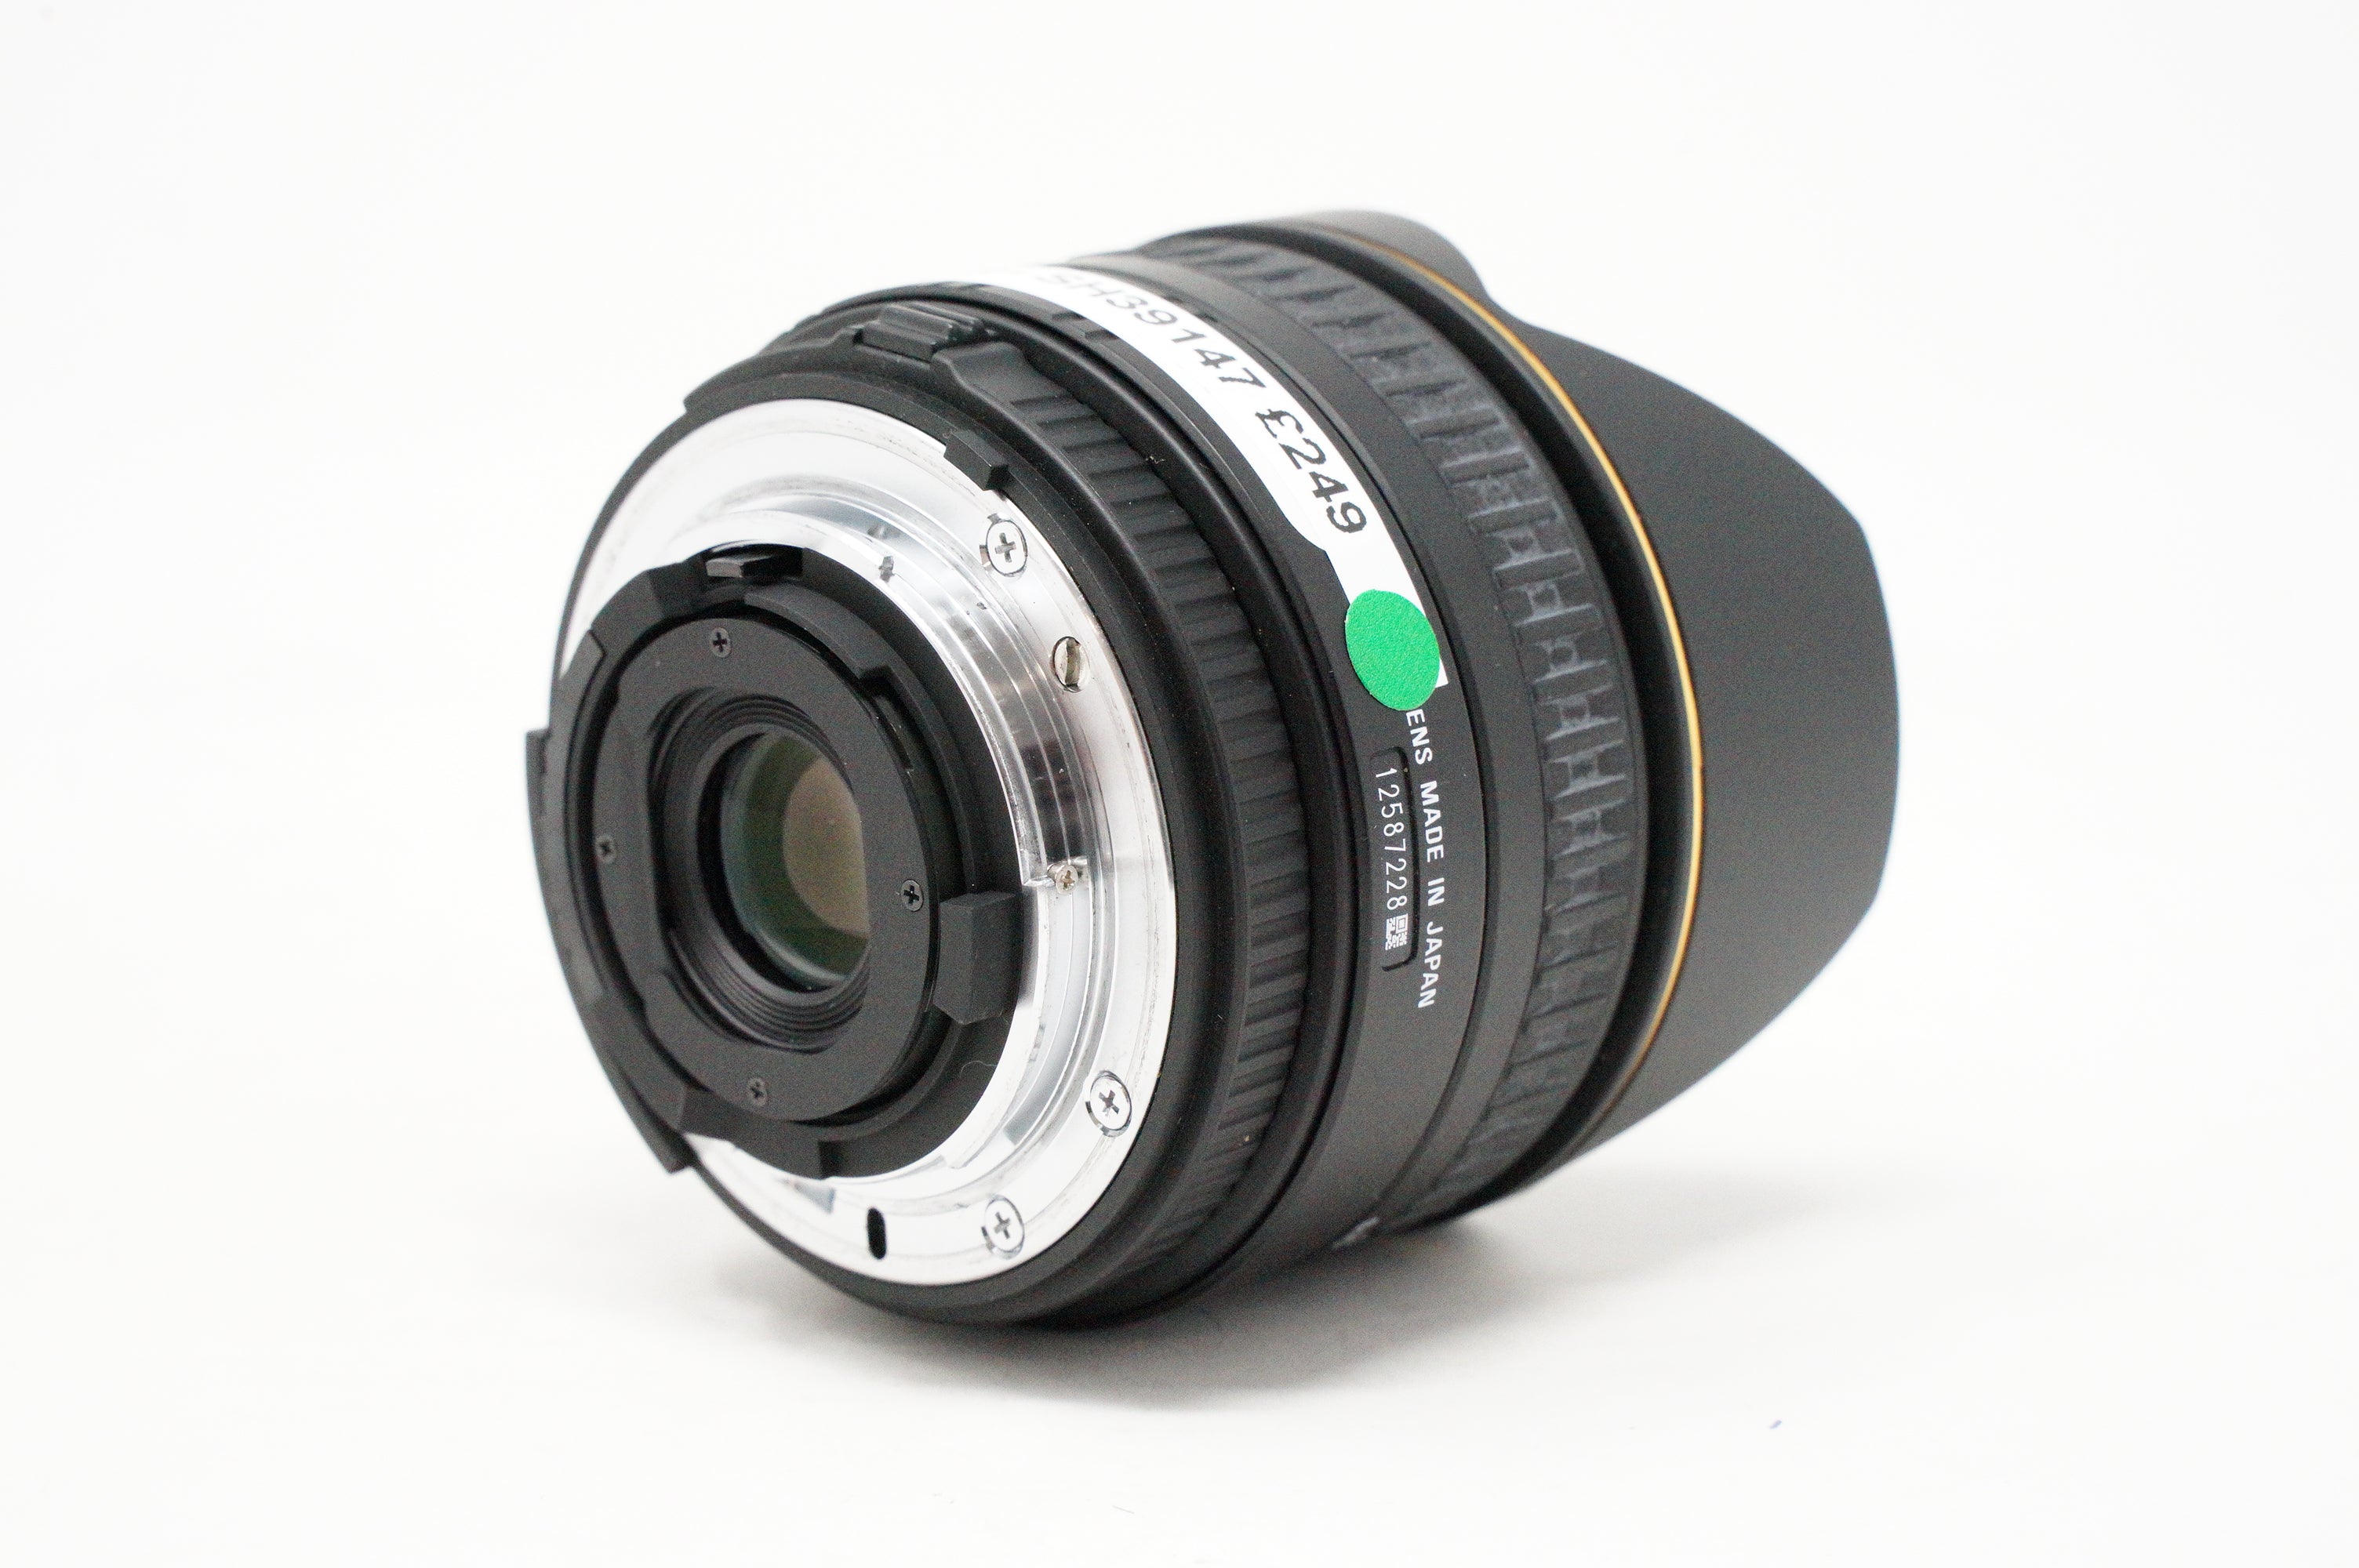 Used Sigma DG 15mm F2.8 Fisheye lens for Nikon AF D (Boxed SH39147)